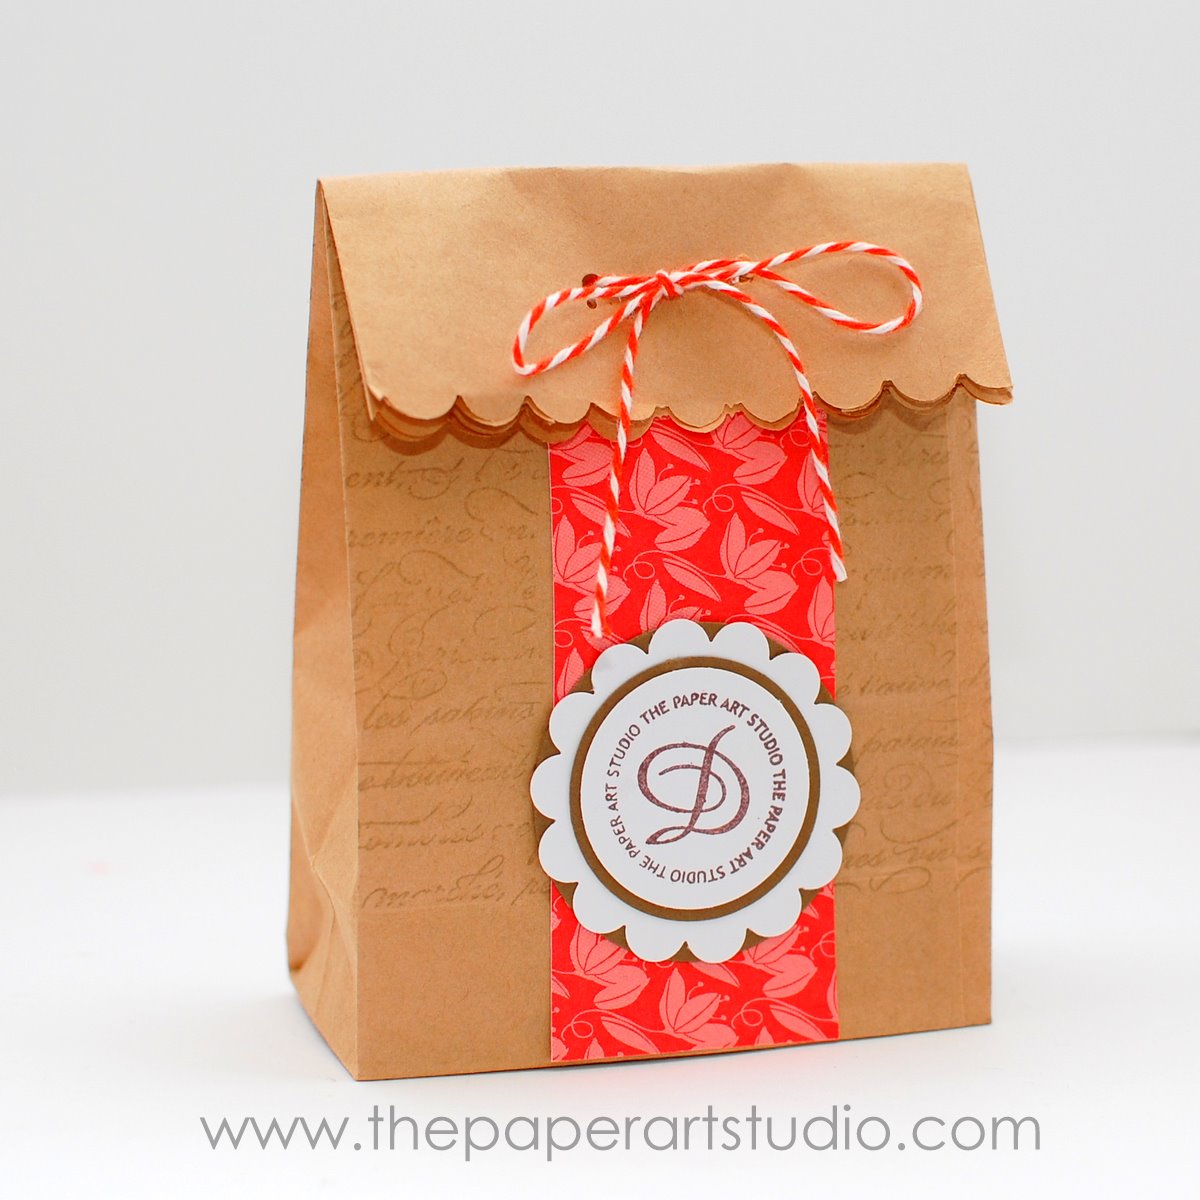 The Paper Art Studio: Pretty packaging